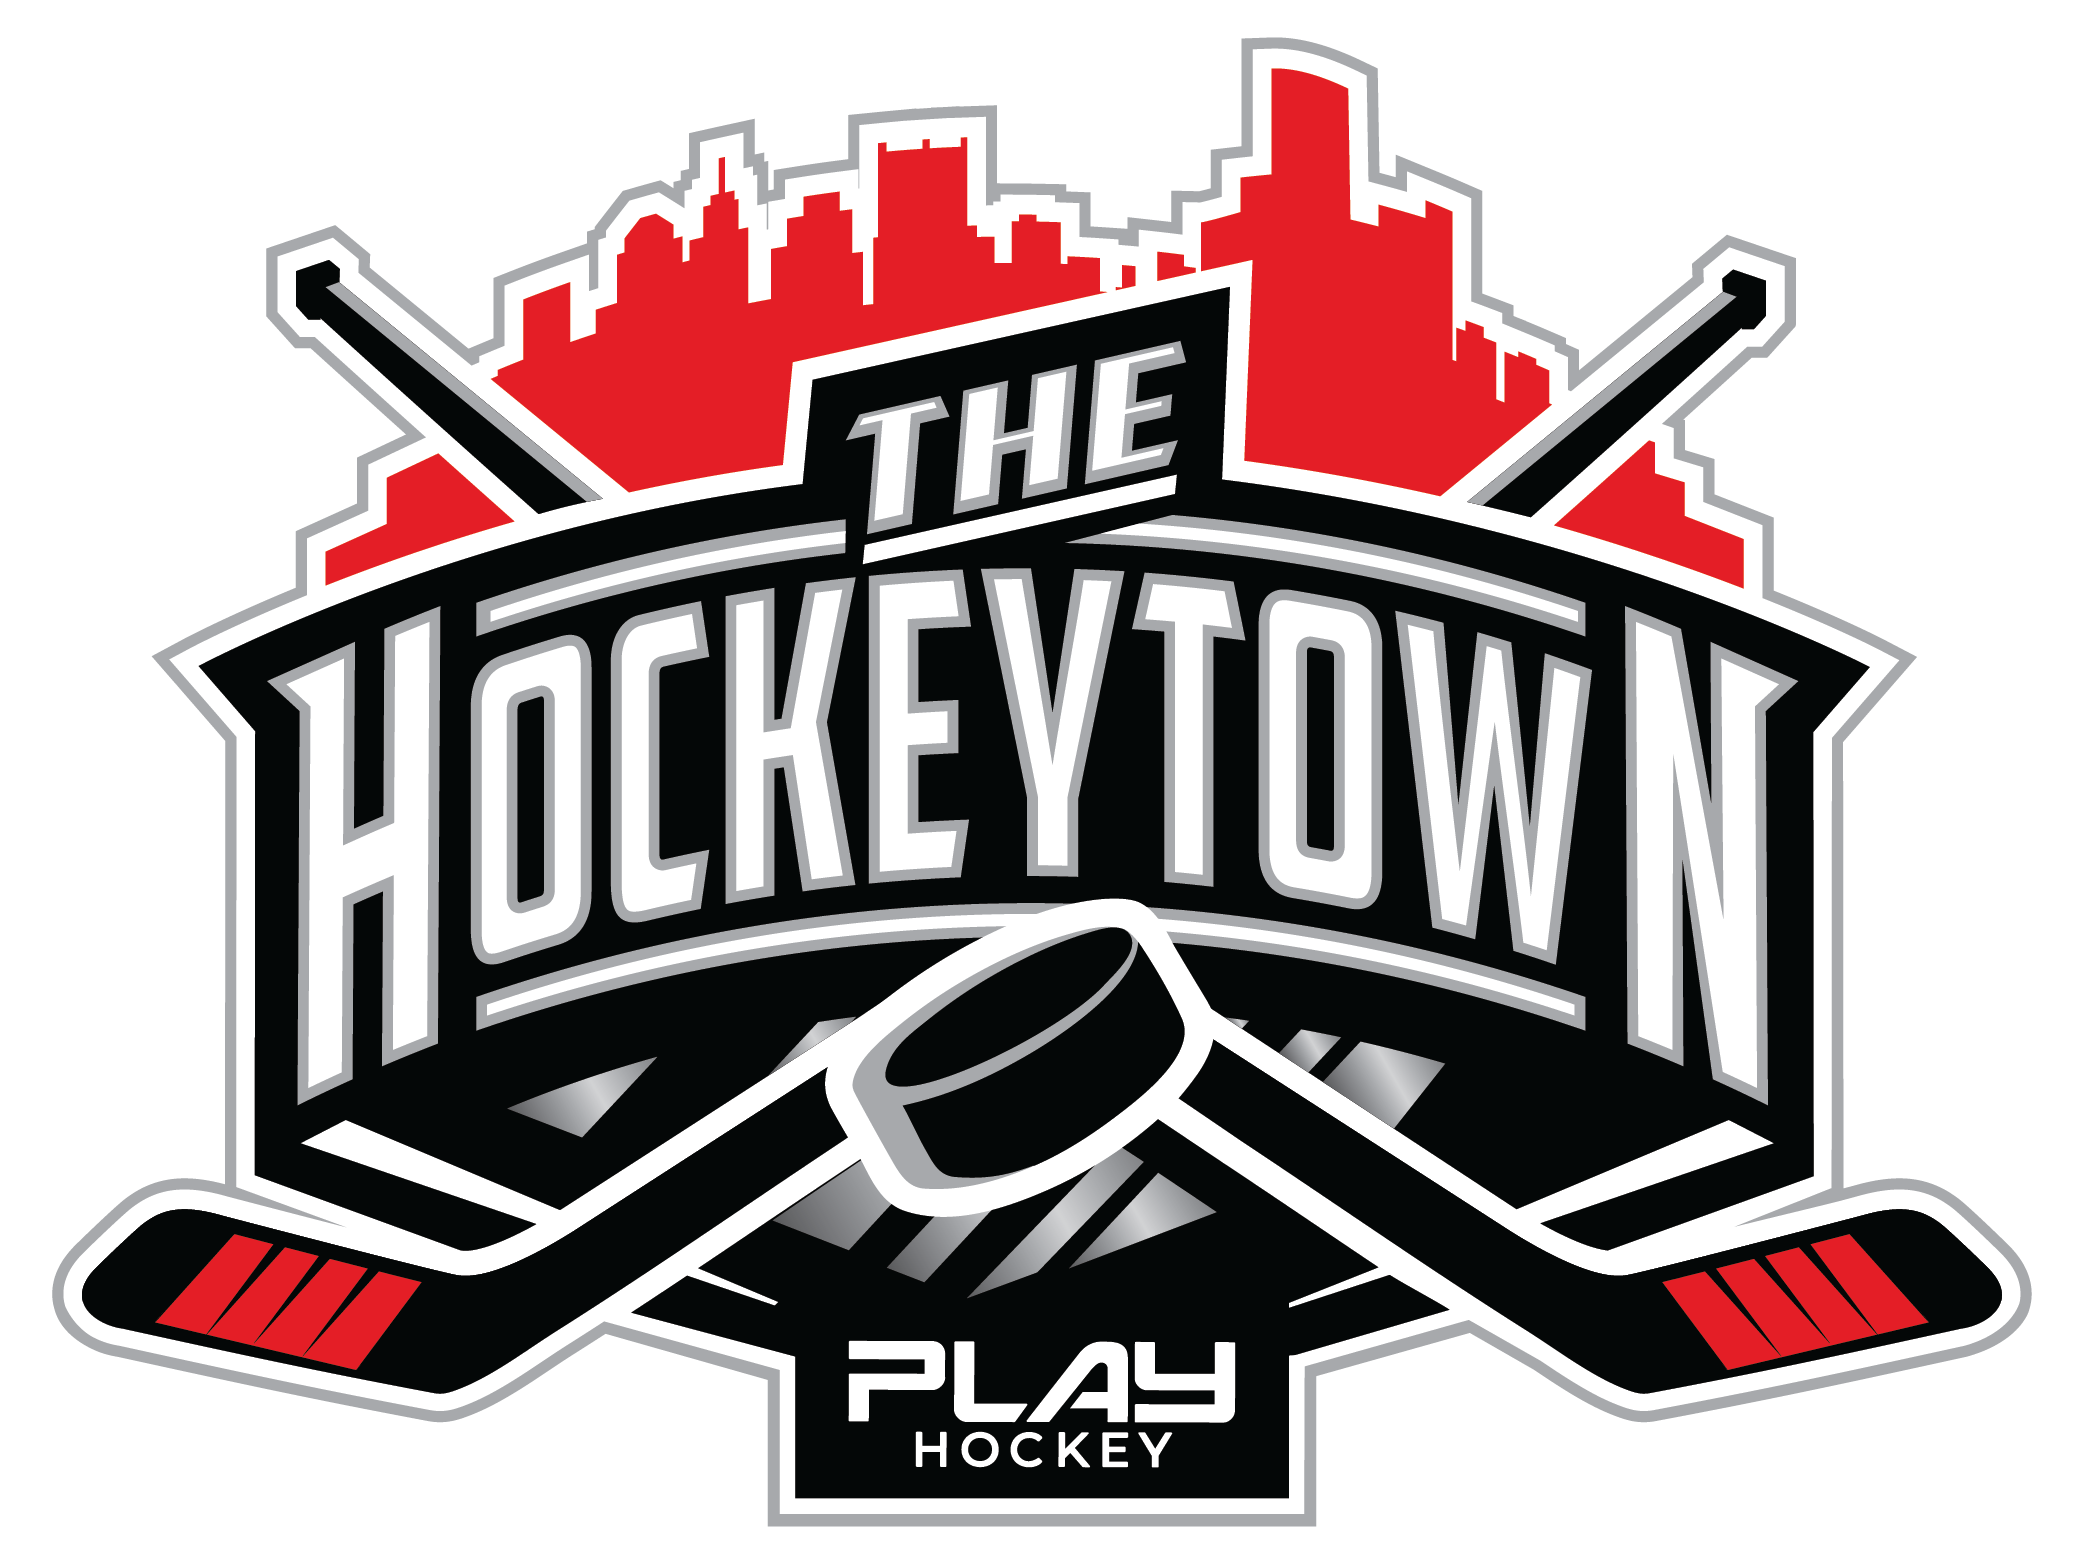 The Hockeytown